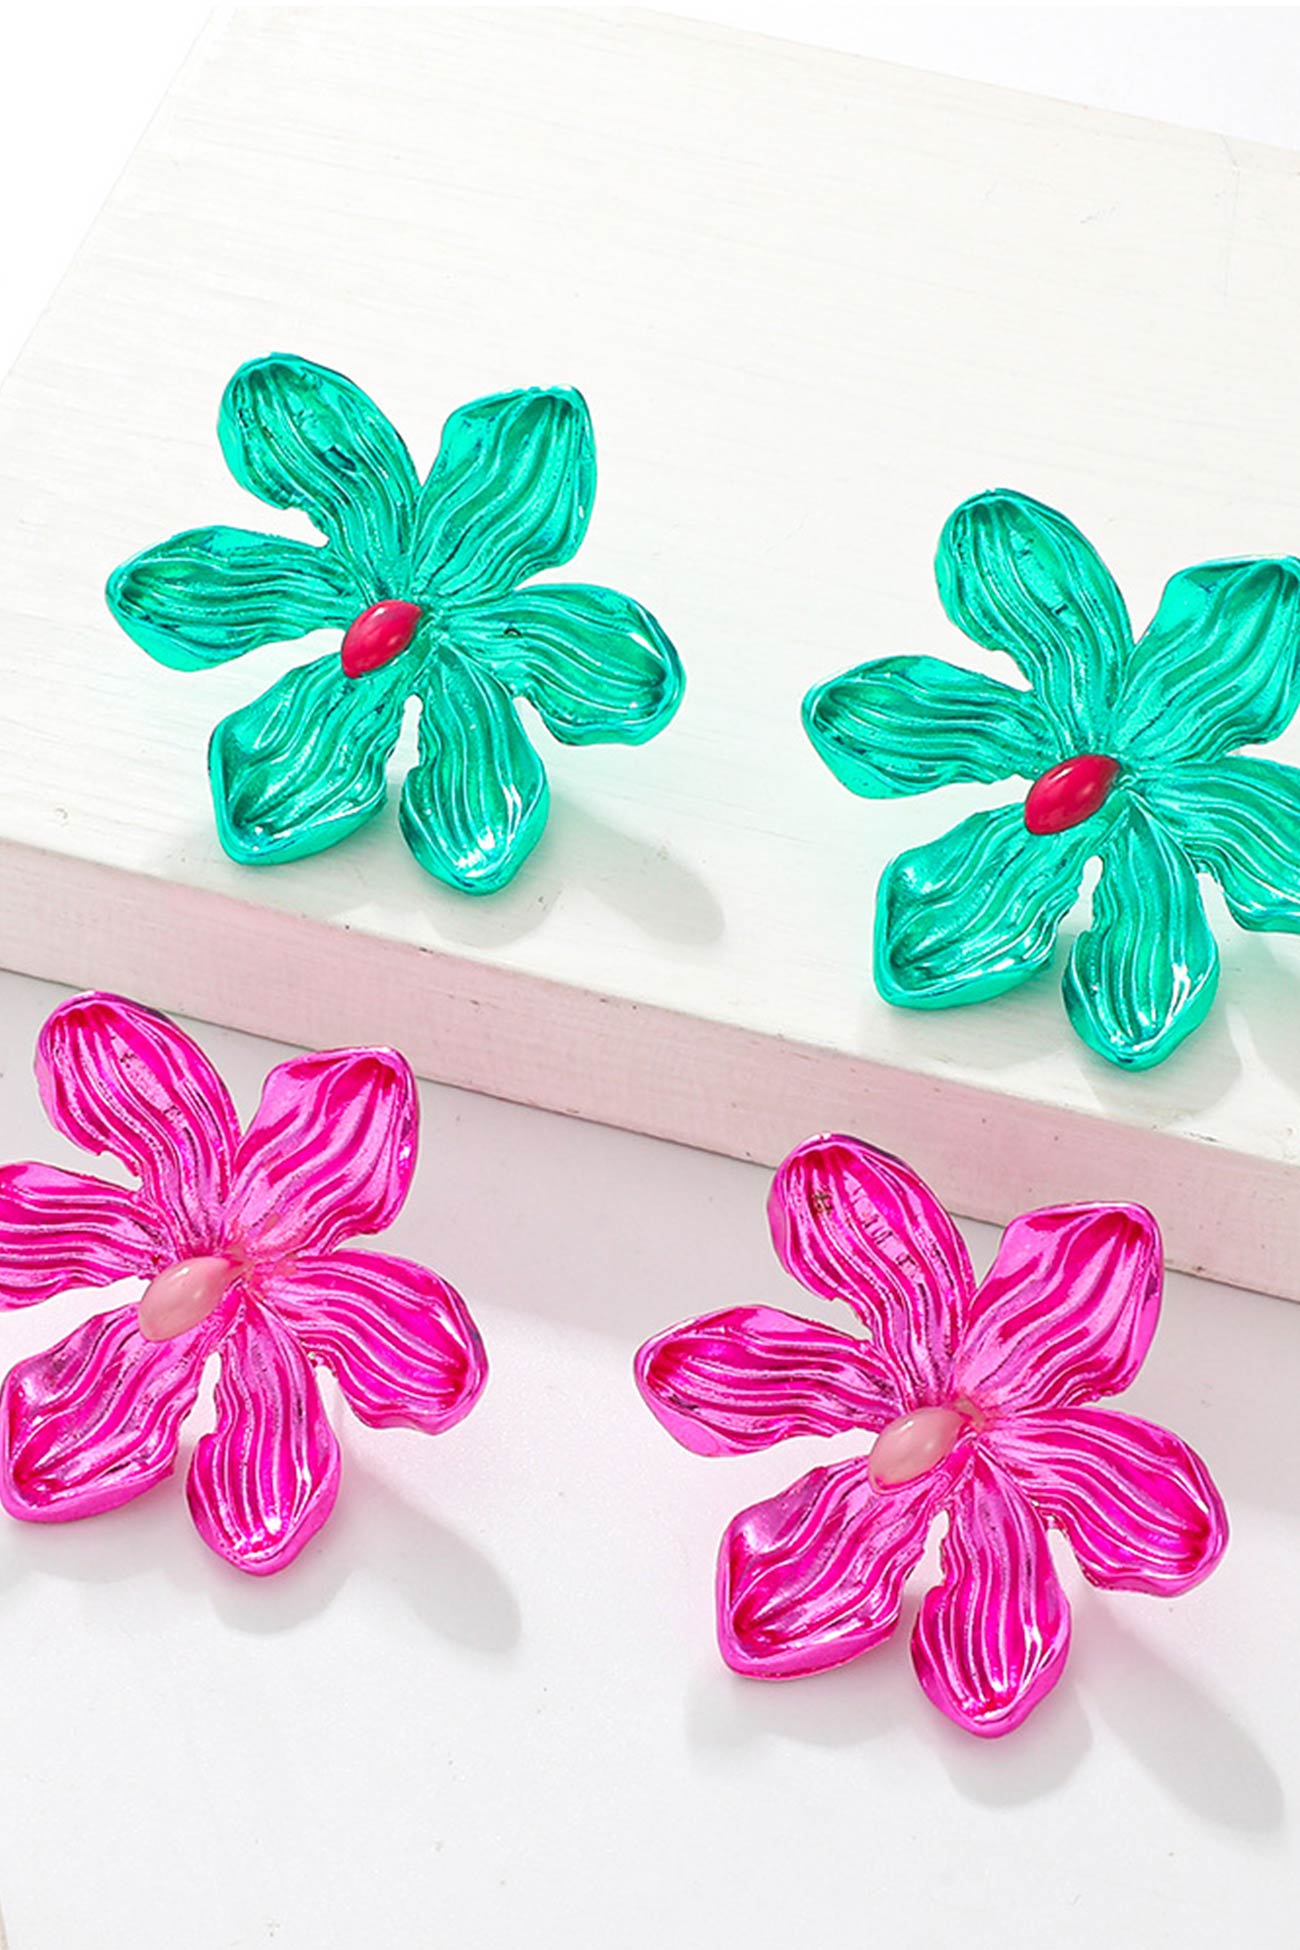 Flytonn-Valentine's Day gift Solid Color Petal Earrings